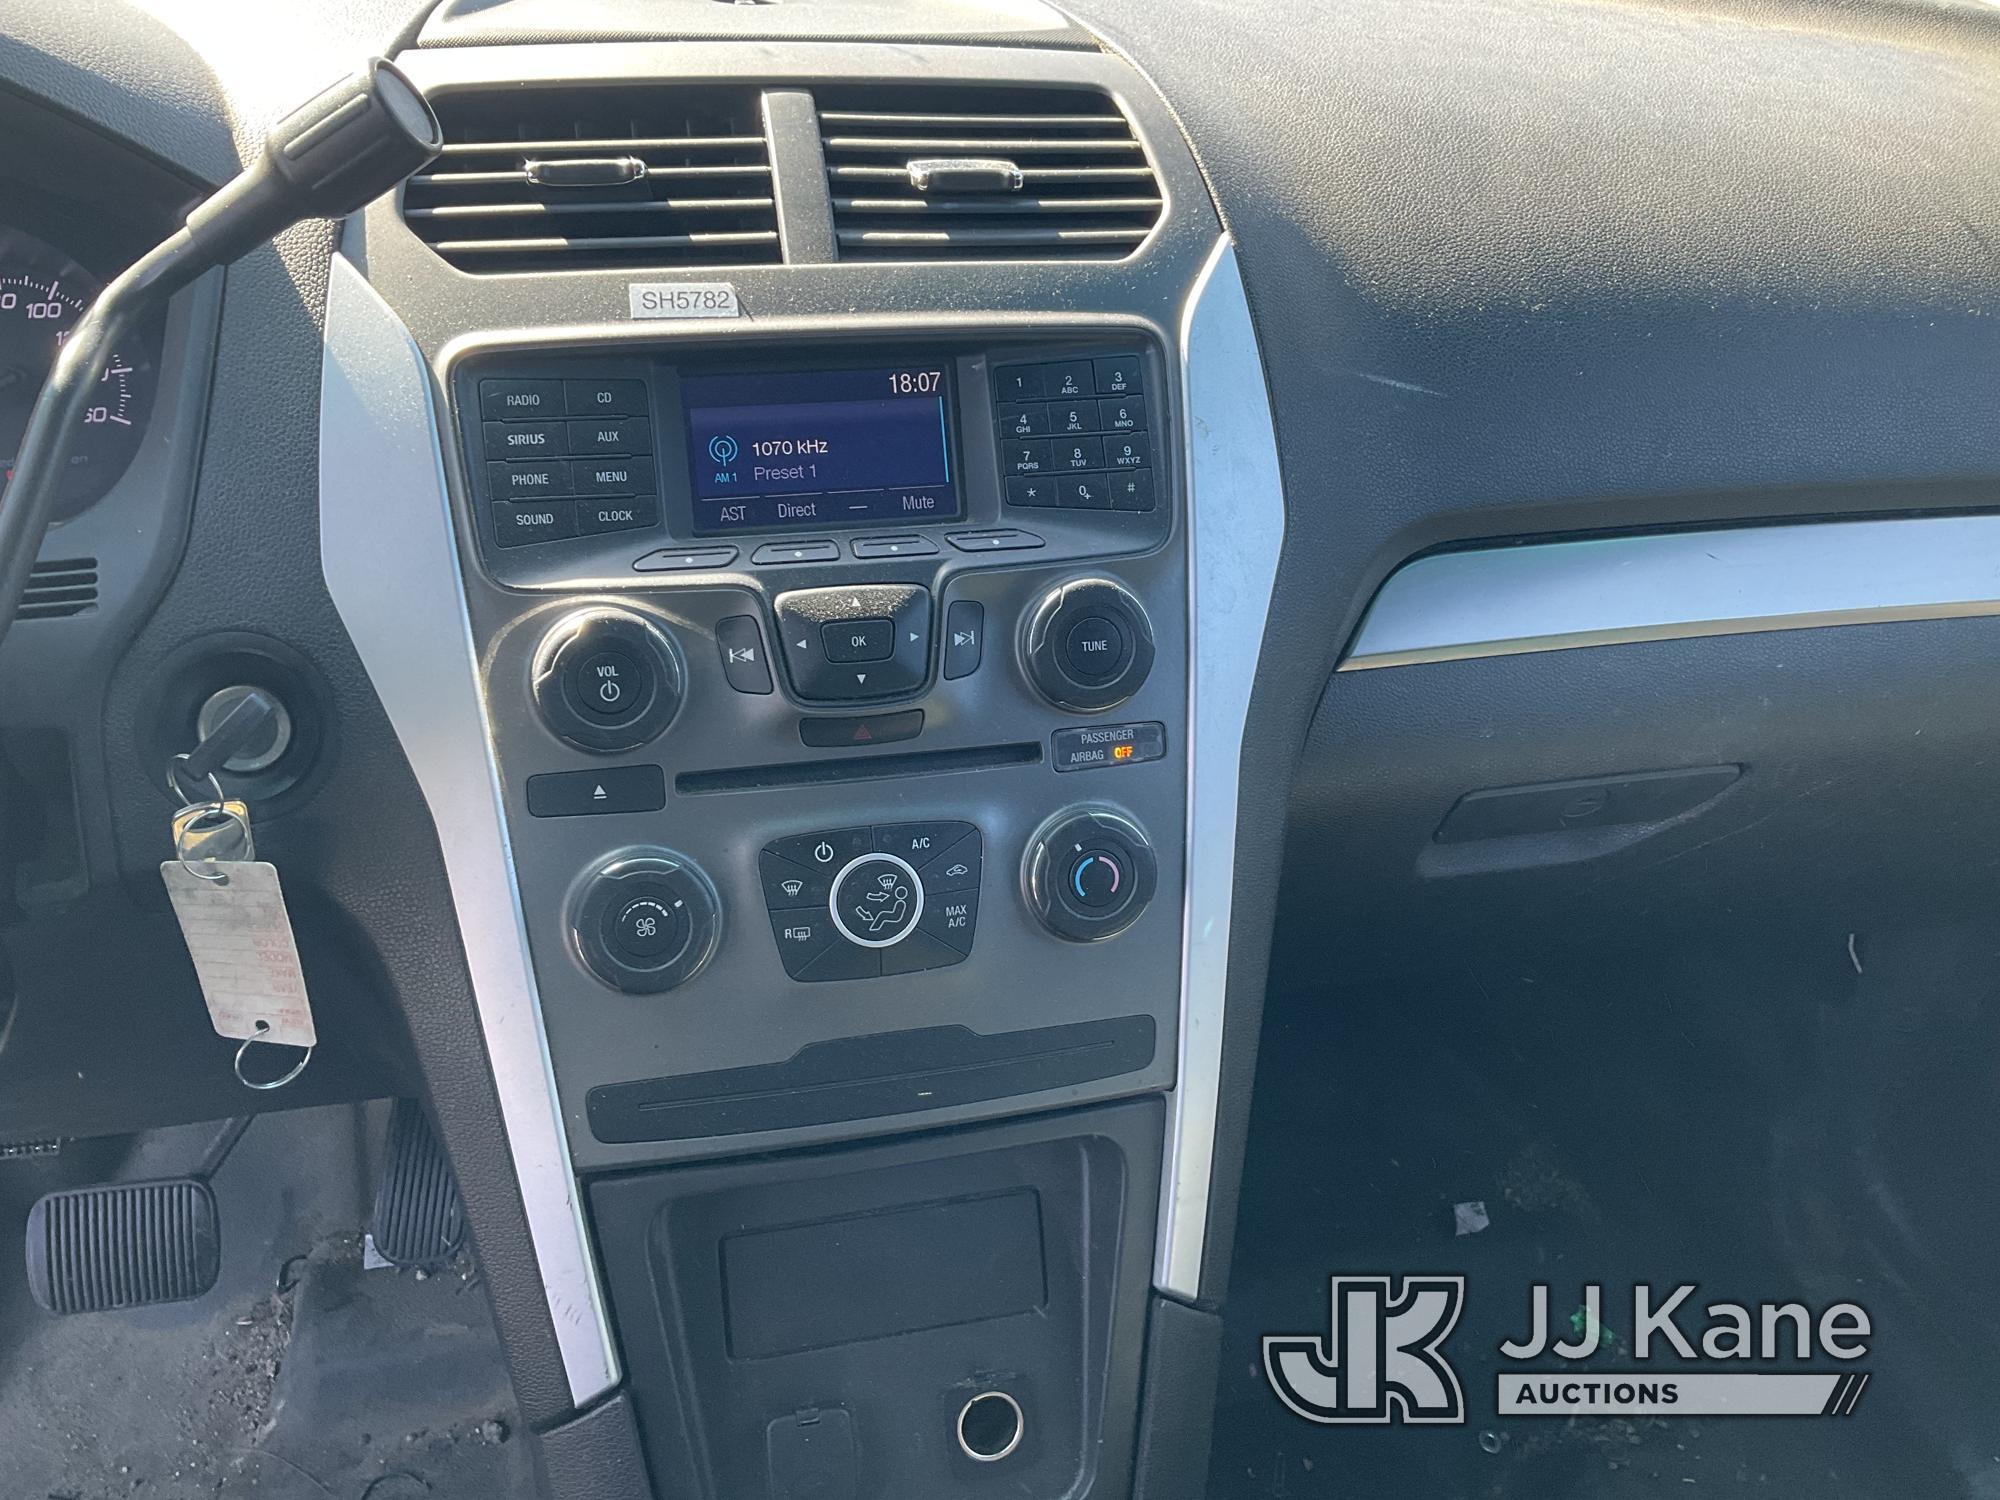 (Jurupa Valley, CA) 2015 Ford Explorer AWD Police Interceptor 4-Door Sport Utility Vehicle Runs, Doe